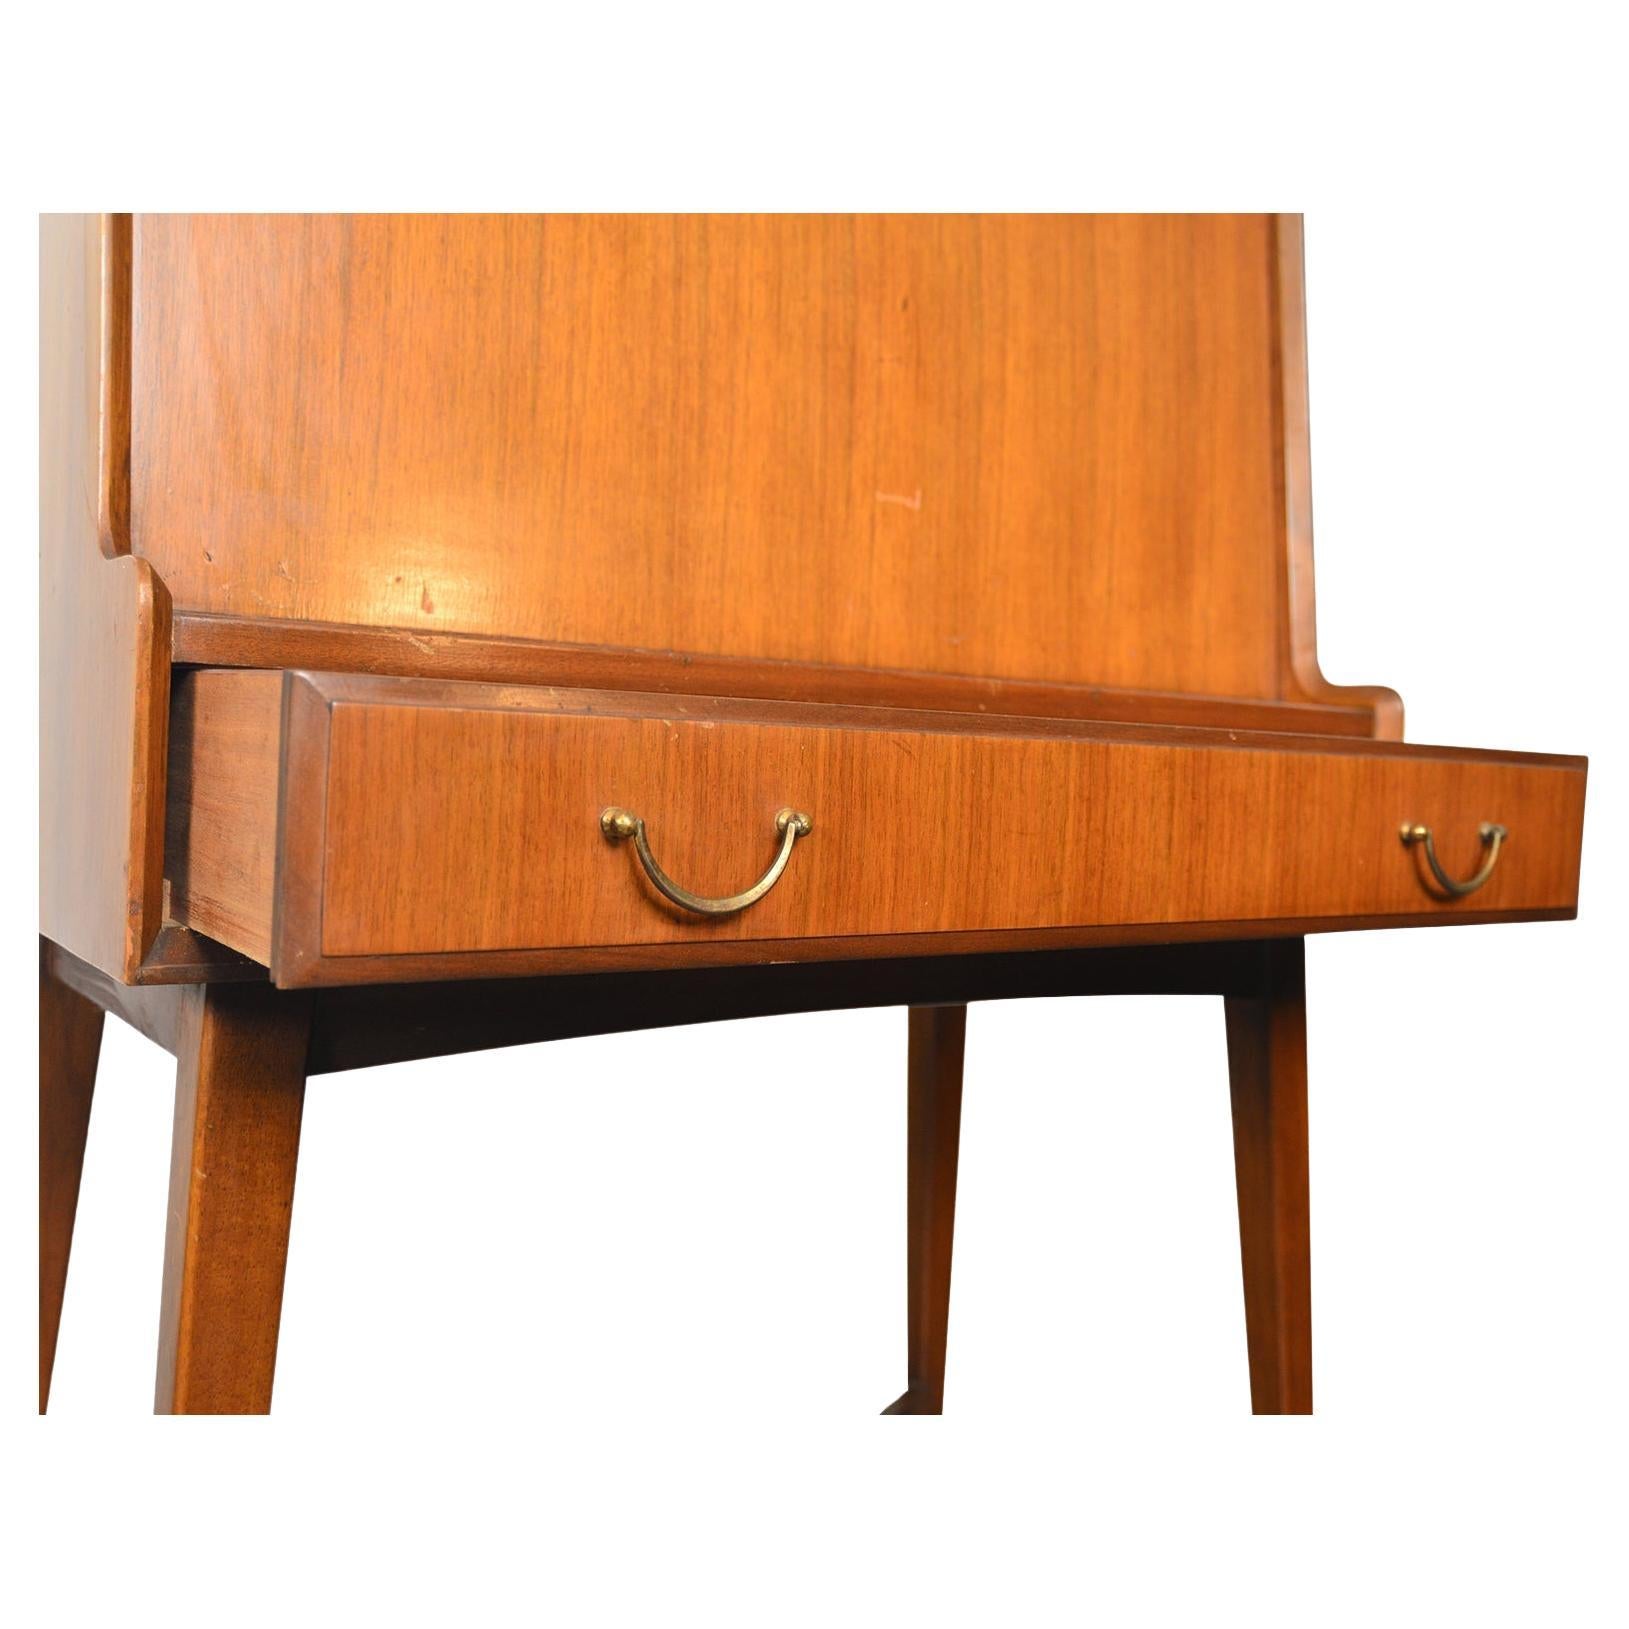 Origin: England
Designer: Unknown
Manufacturer: Wrighton Furniture
Era: 1950s
Materials: Afromosia
Measurements: 30